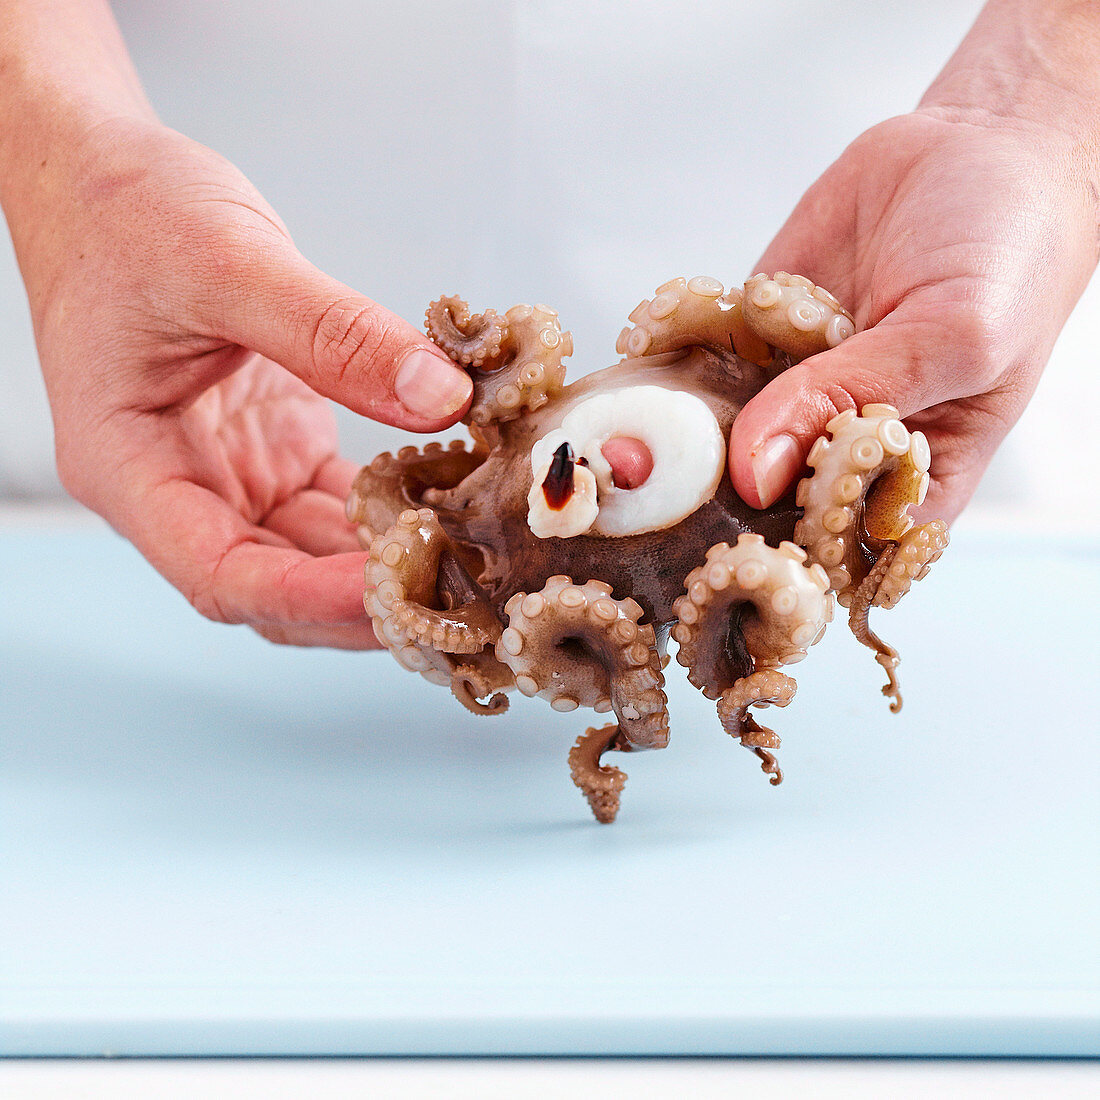 How to prepare octopus